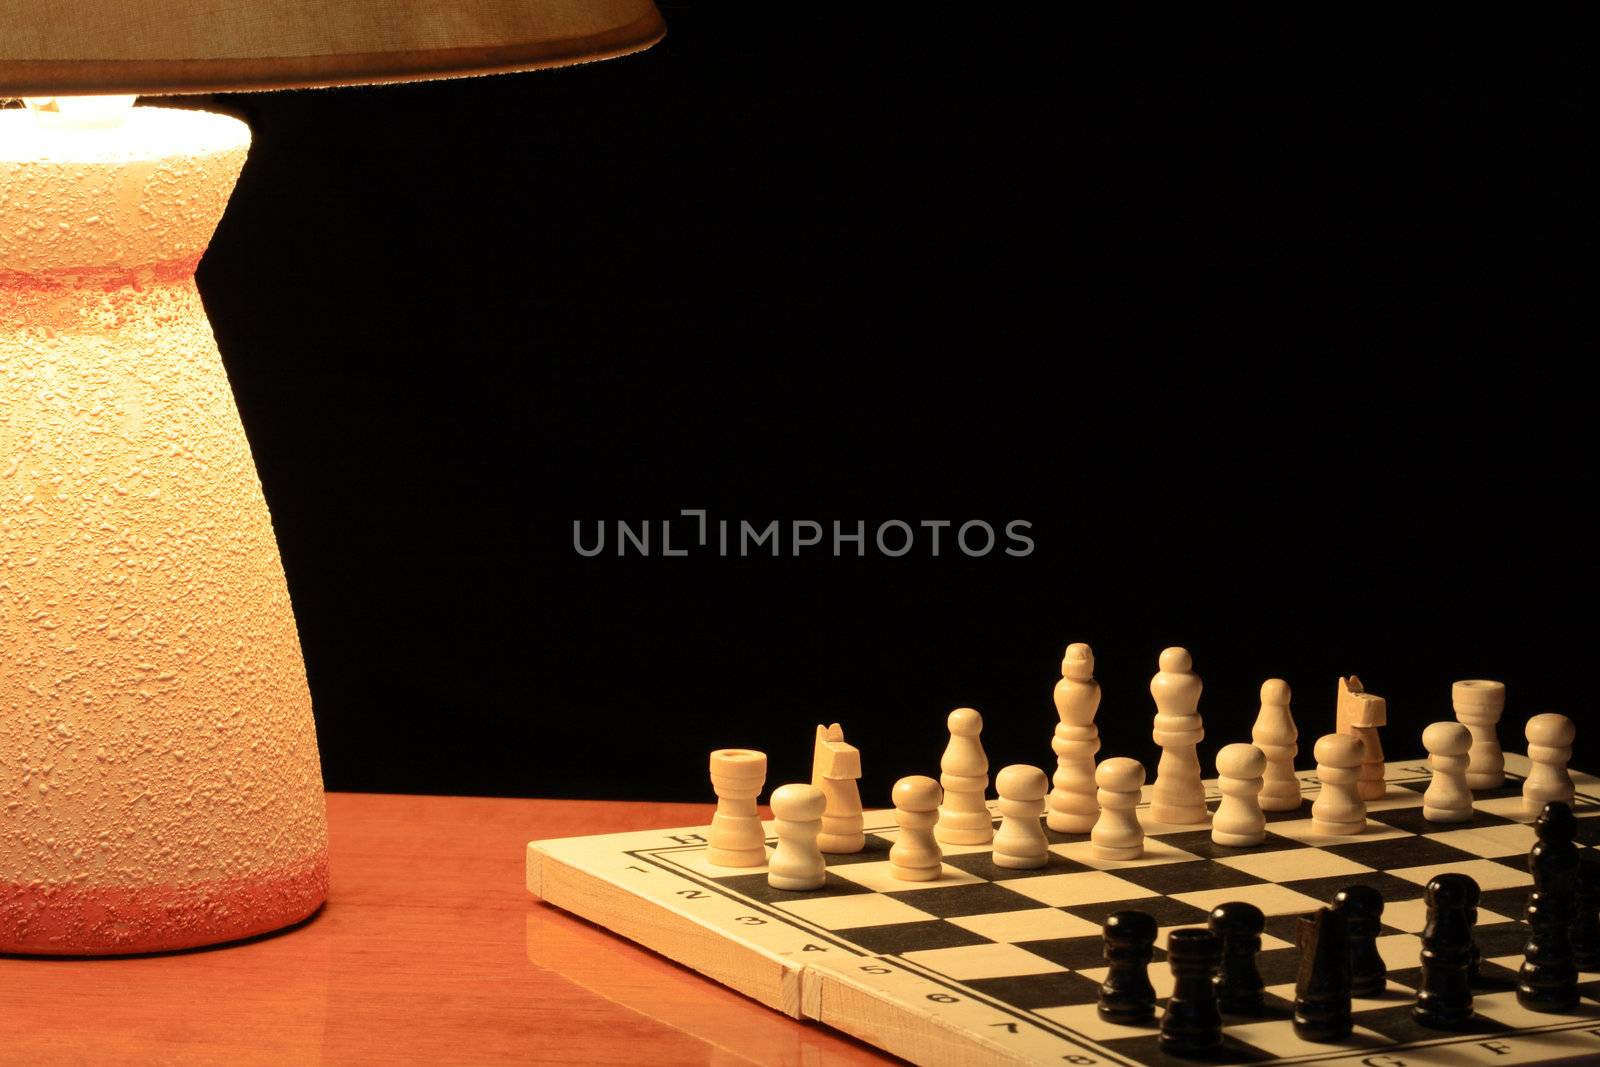 Luminous table lamp standing near chess board on dark background